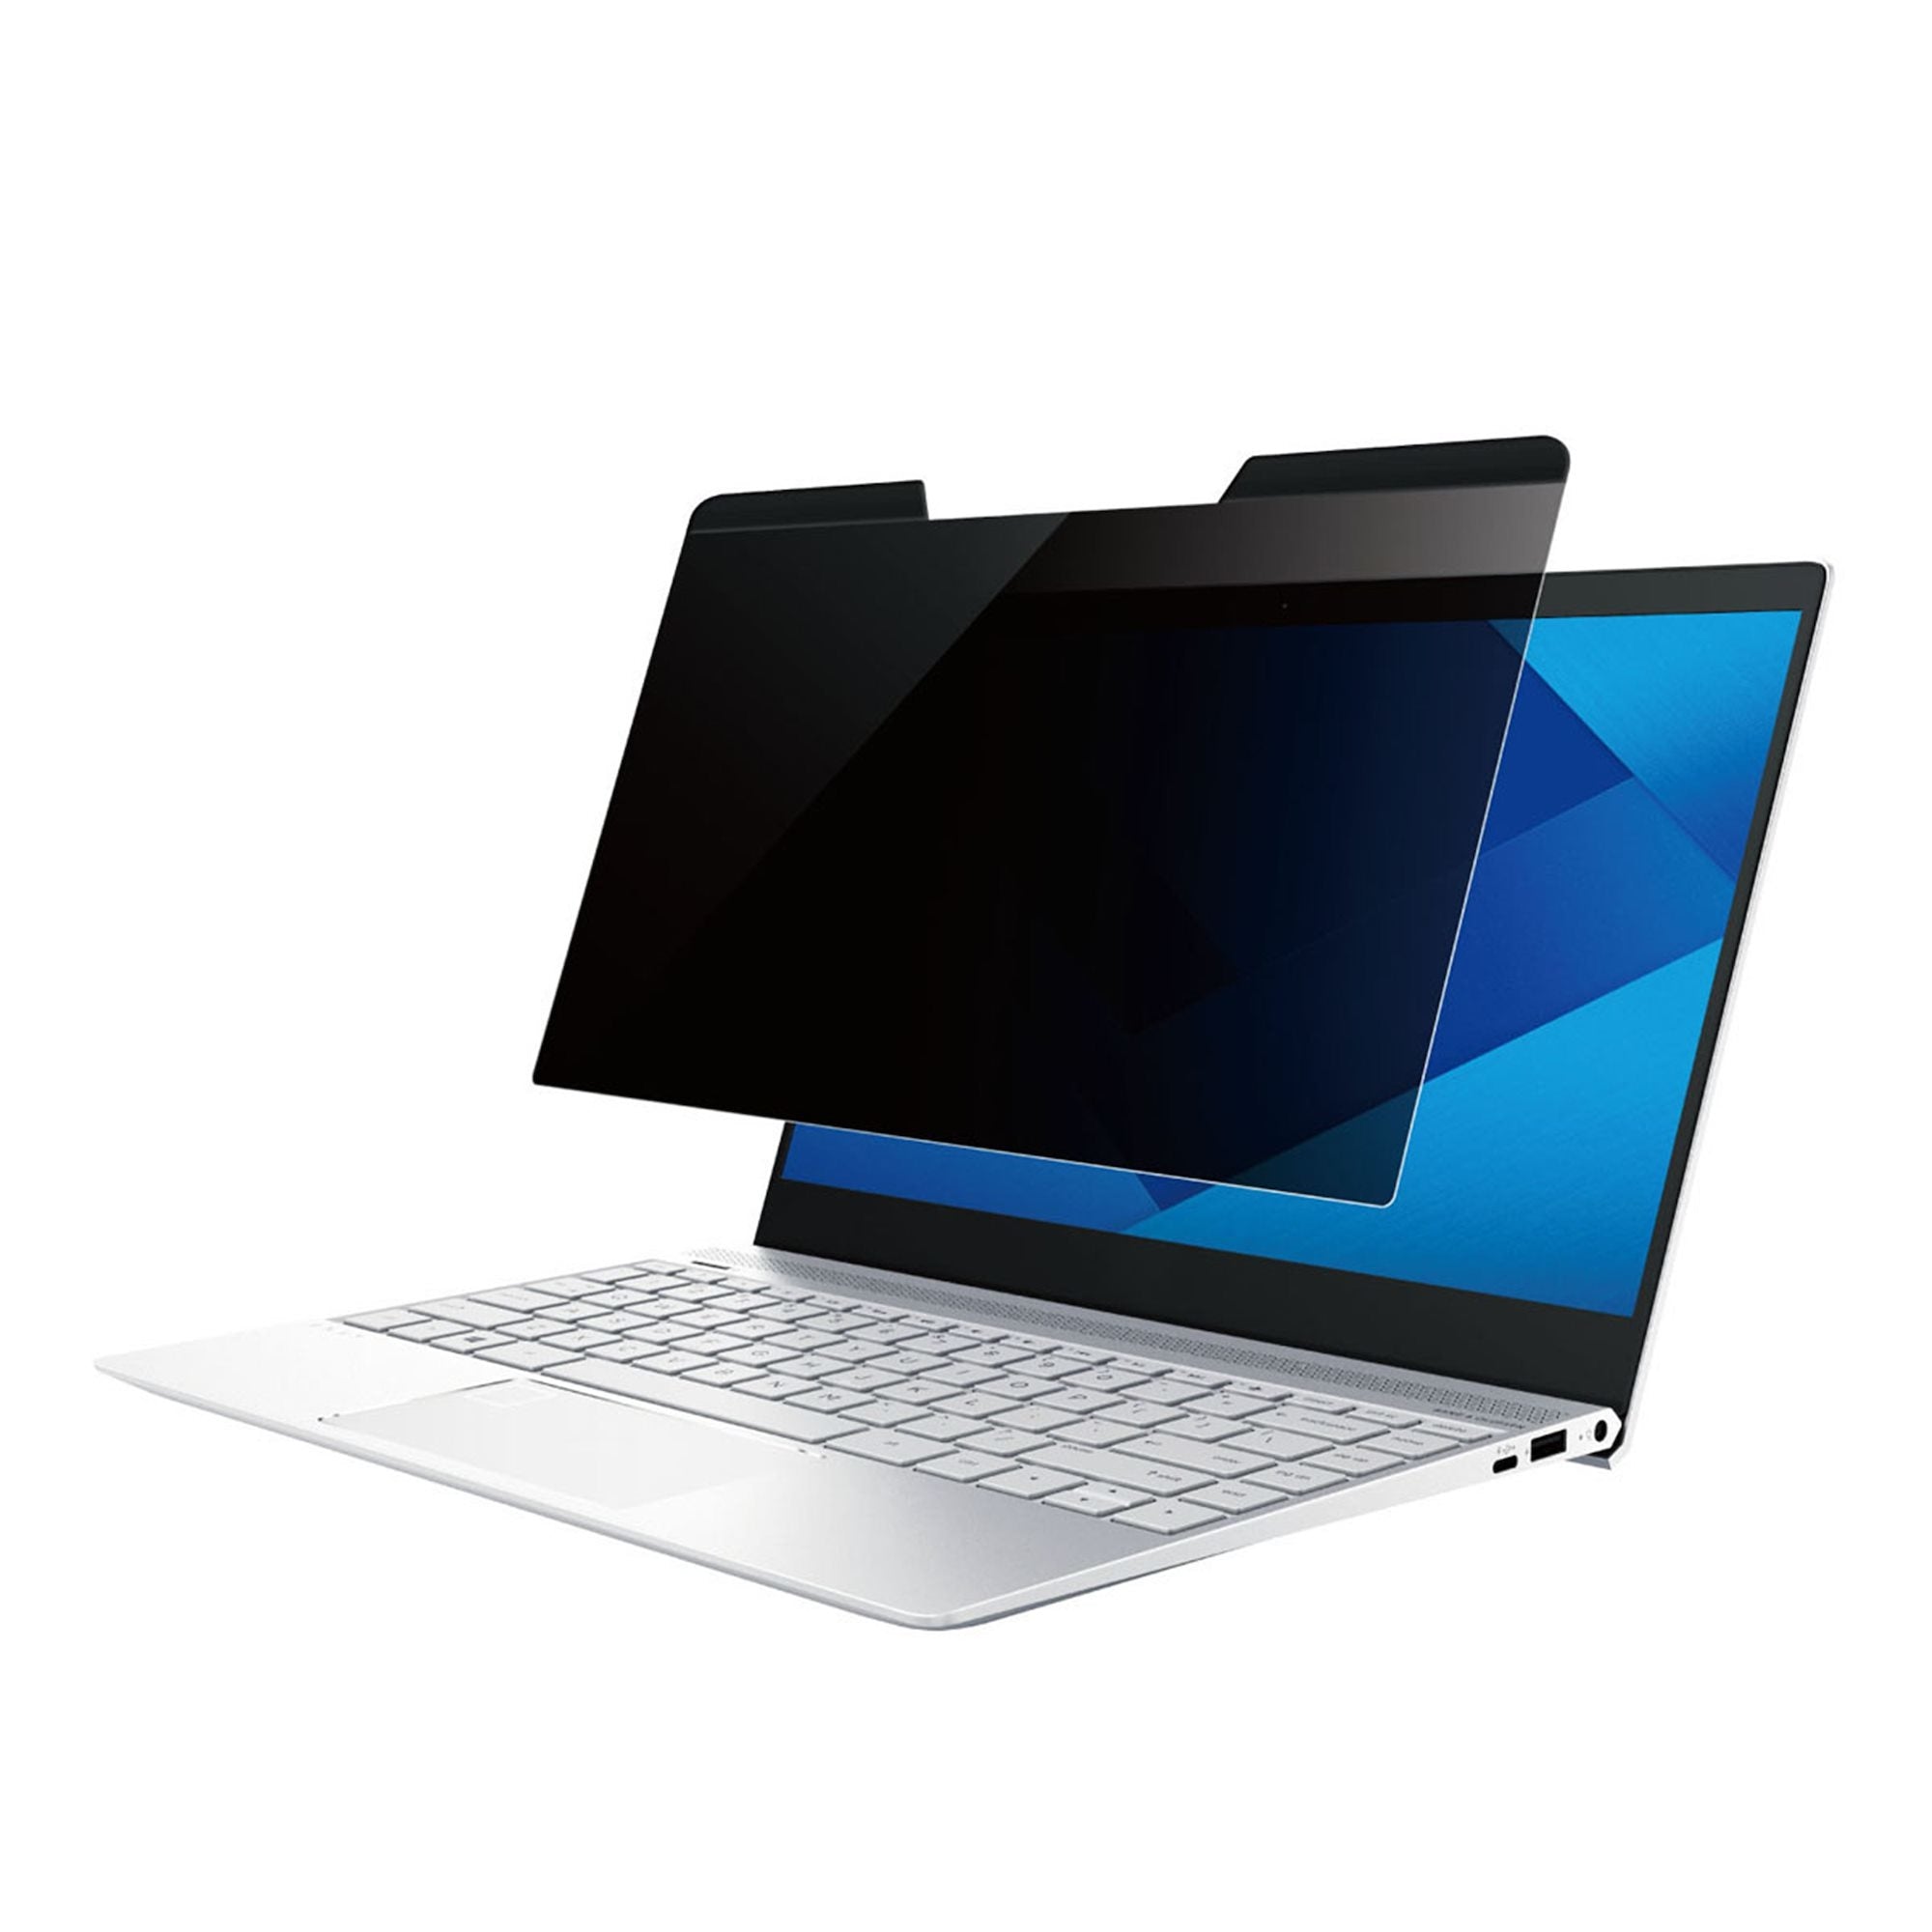 Filtro De Privacidad Para Laptop De 15.6 - Protector Filtro De Seguridad Para Pantalla De Laptop - Reduce Luz Azul 16:9 - Startech.Com Mod. Privscnlt15